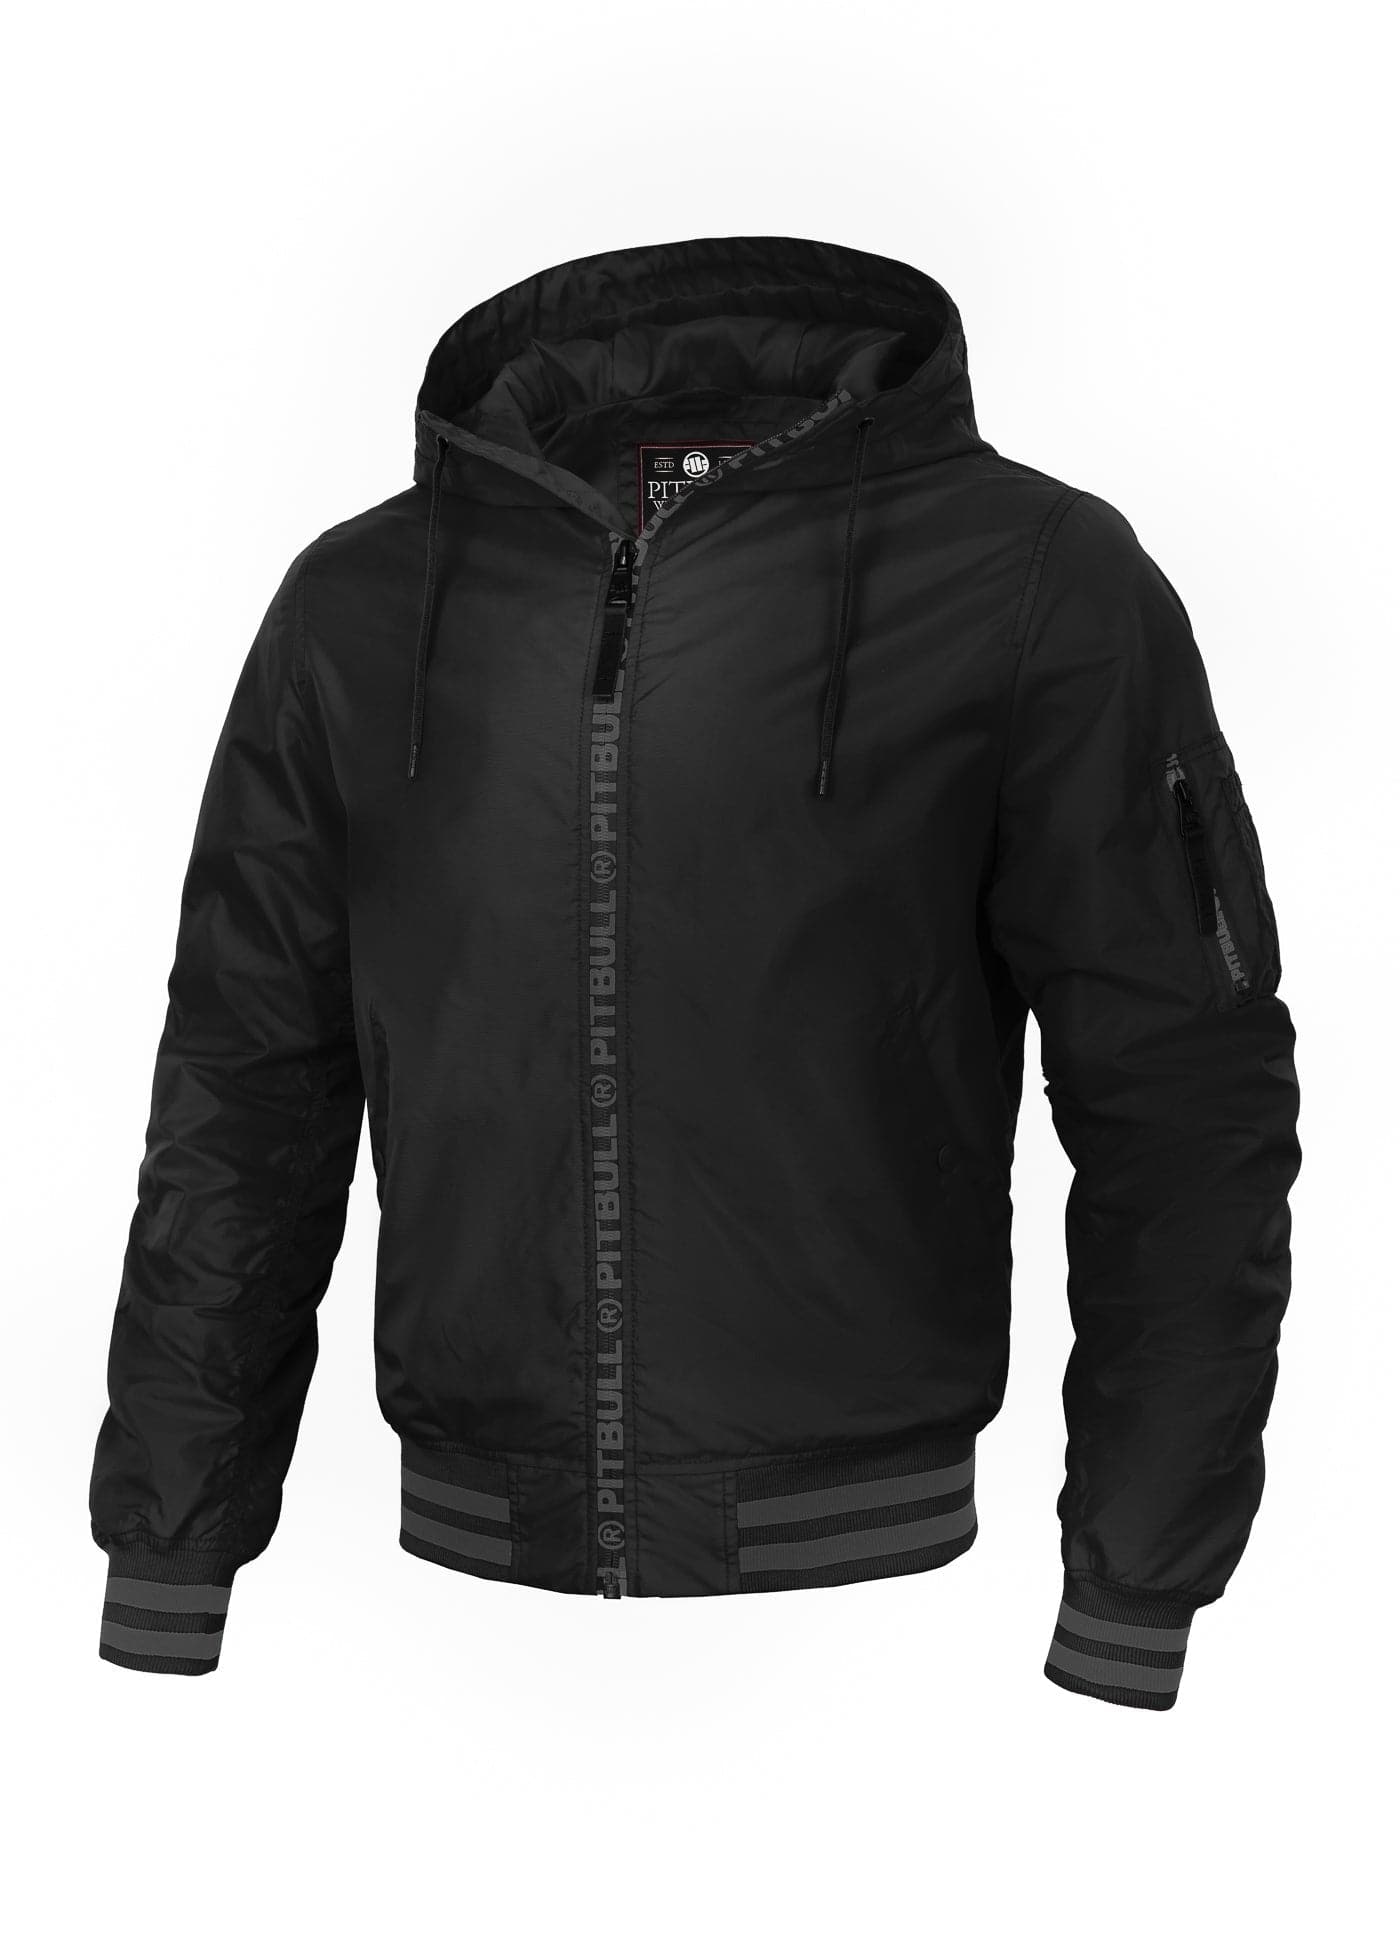 | Buy OVERPARK Jacket Store Pitbull Black